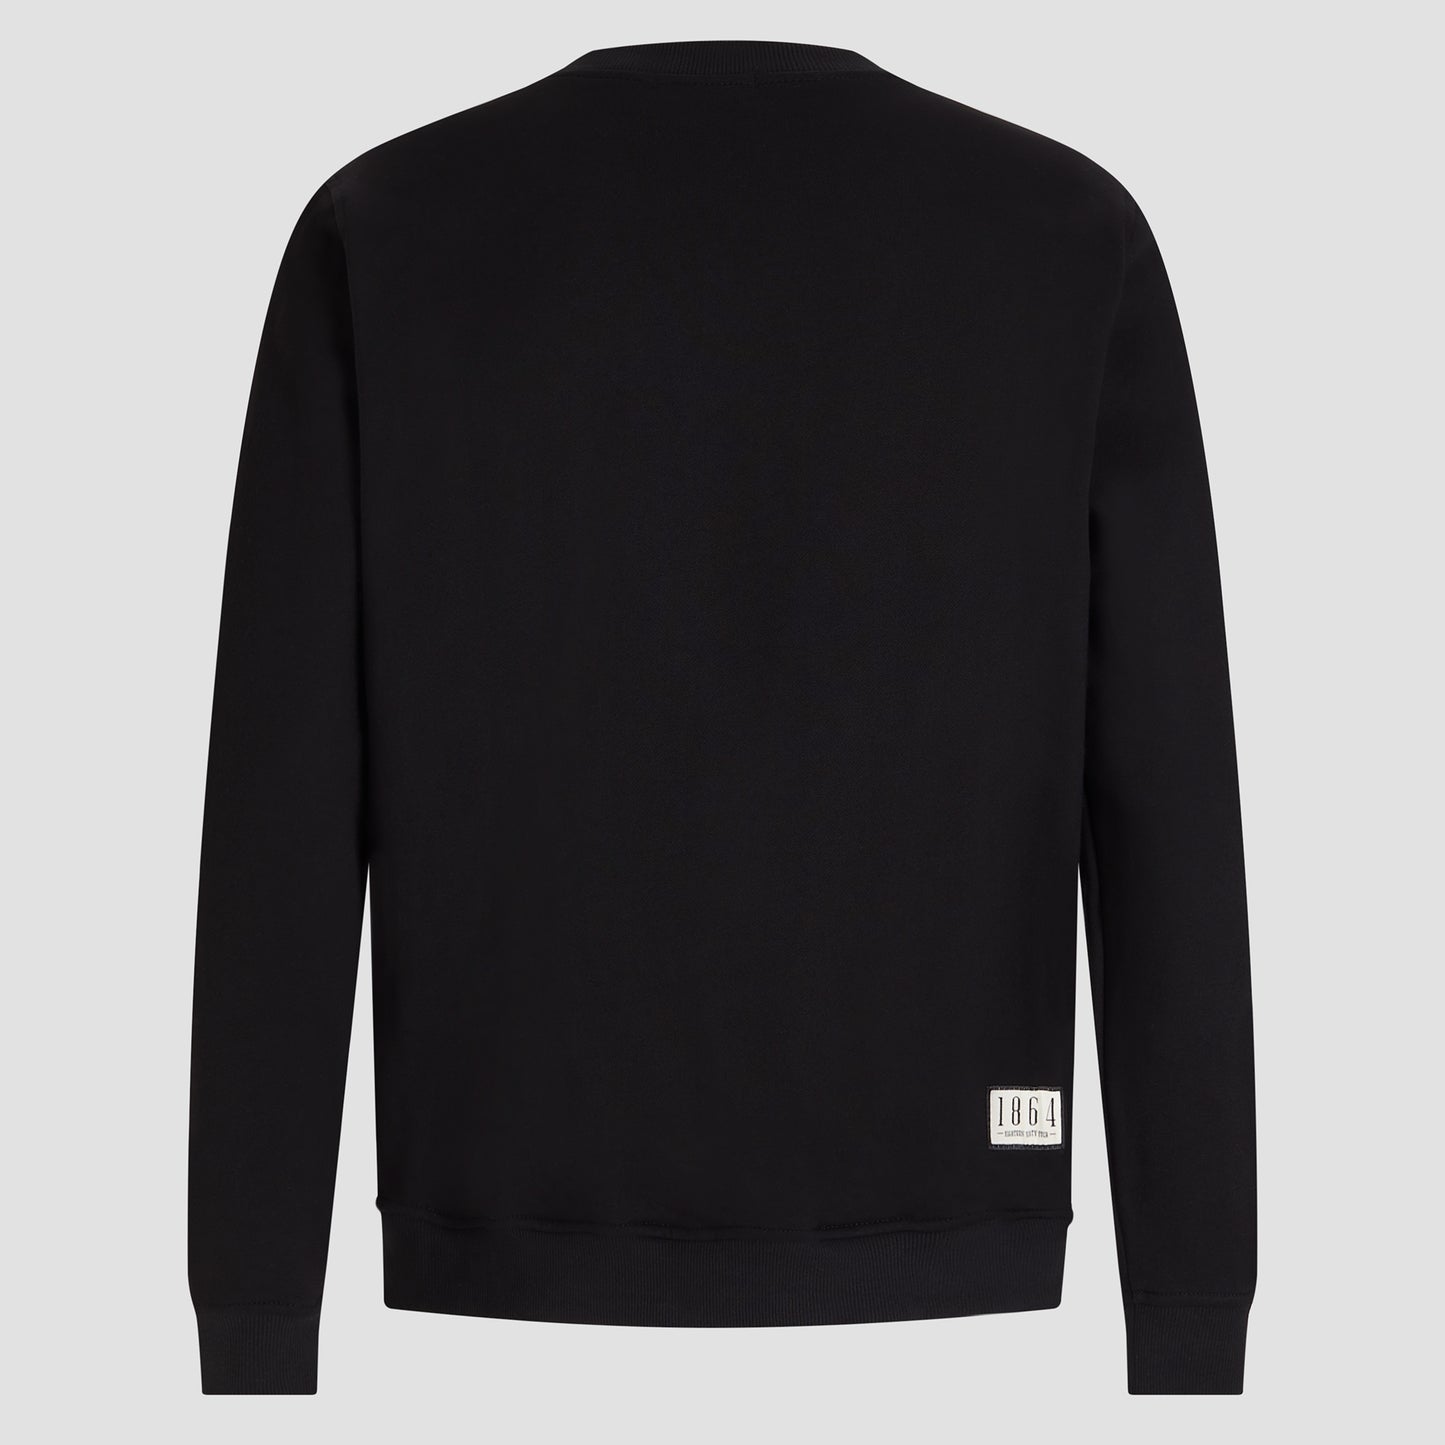 1864 Sweatshirt - Black